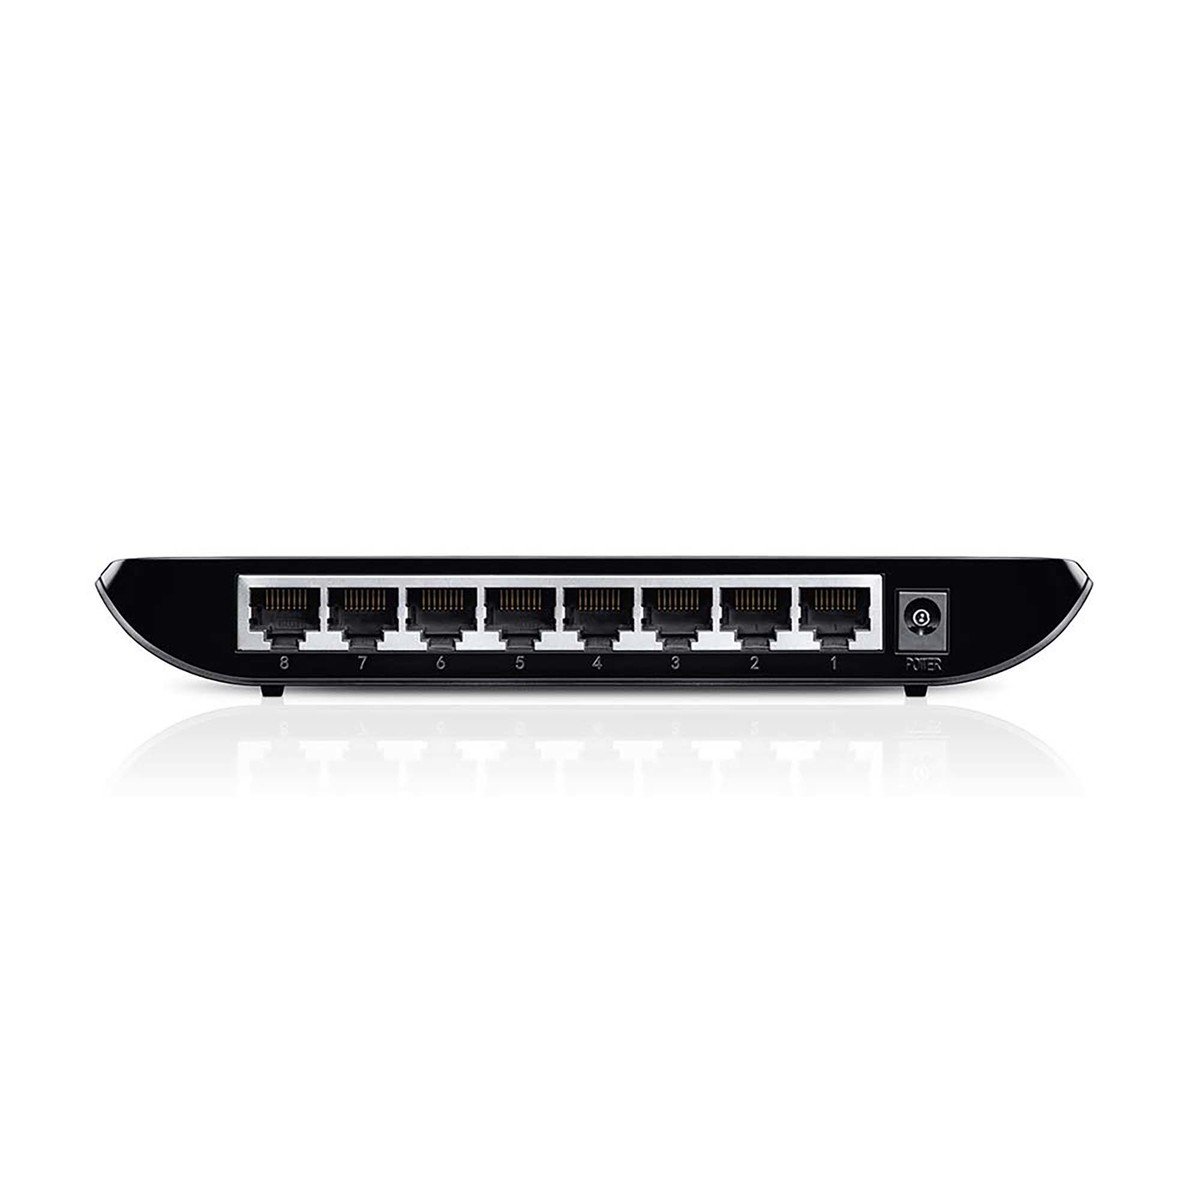 TP-Link  8 Port Network Switch TL-SG1008D